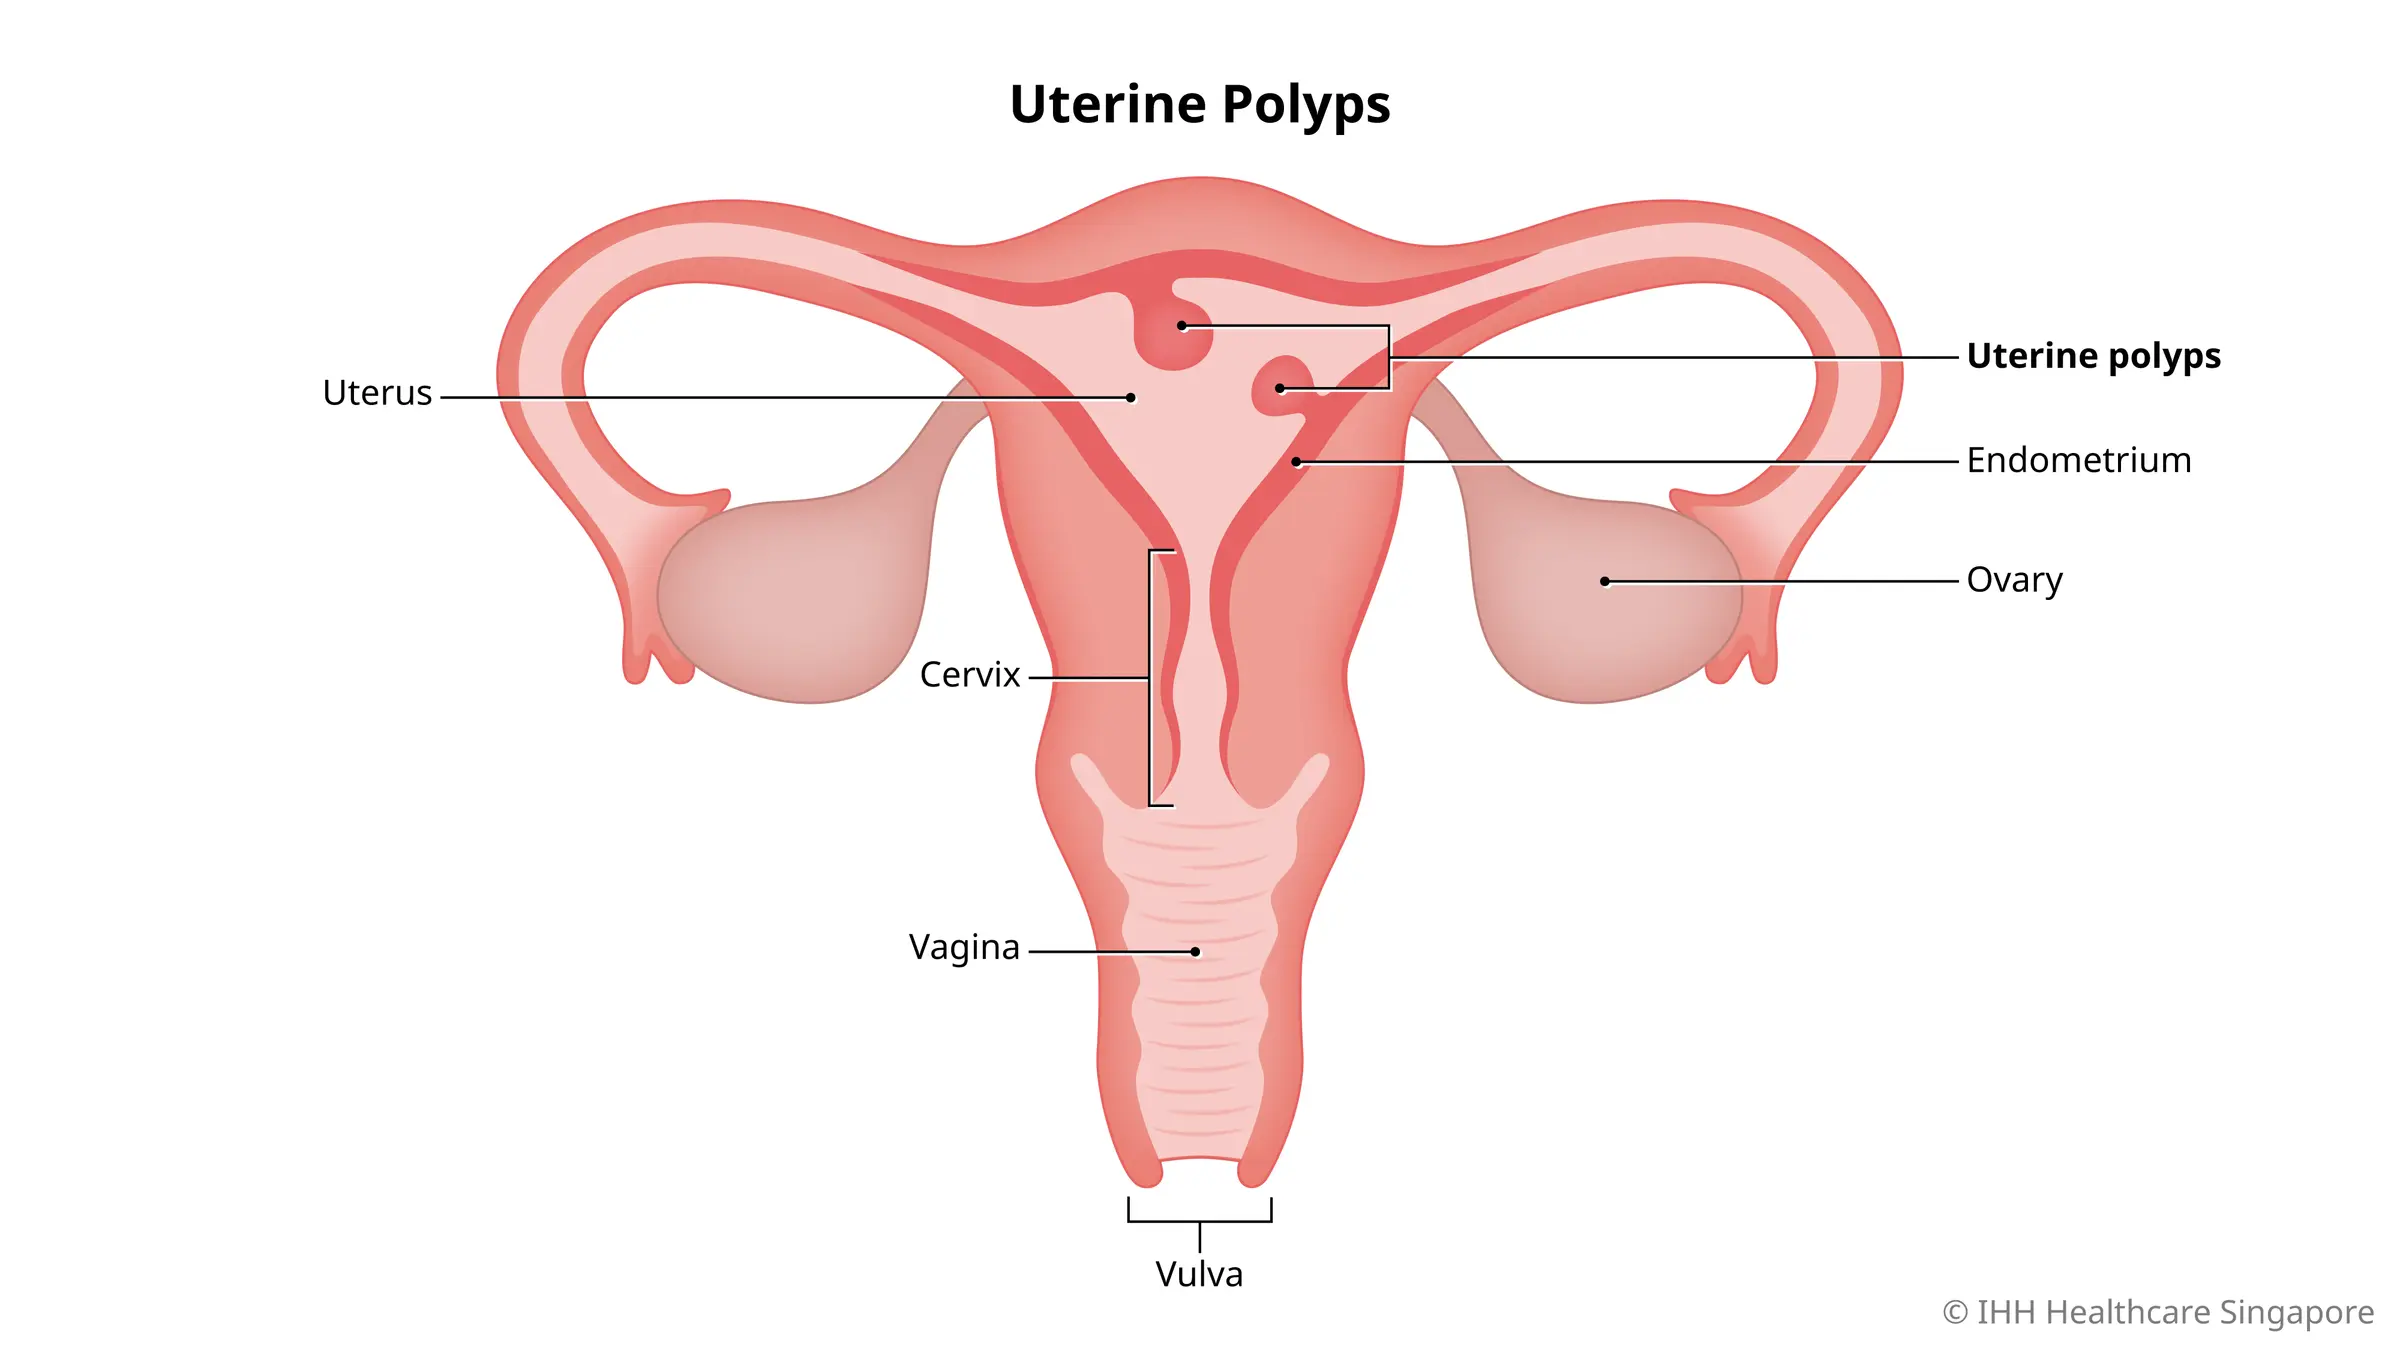 What are uterine (endometrial) polyps?